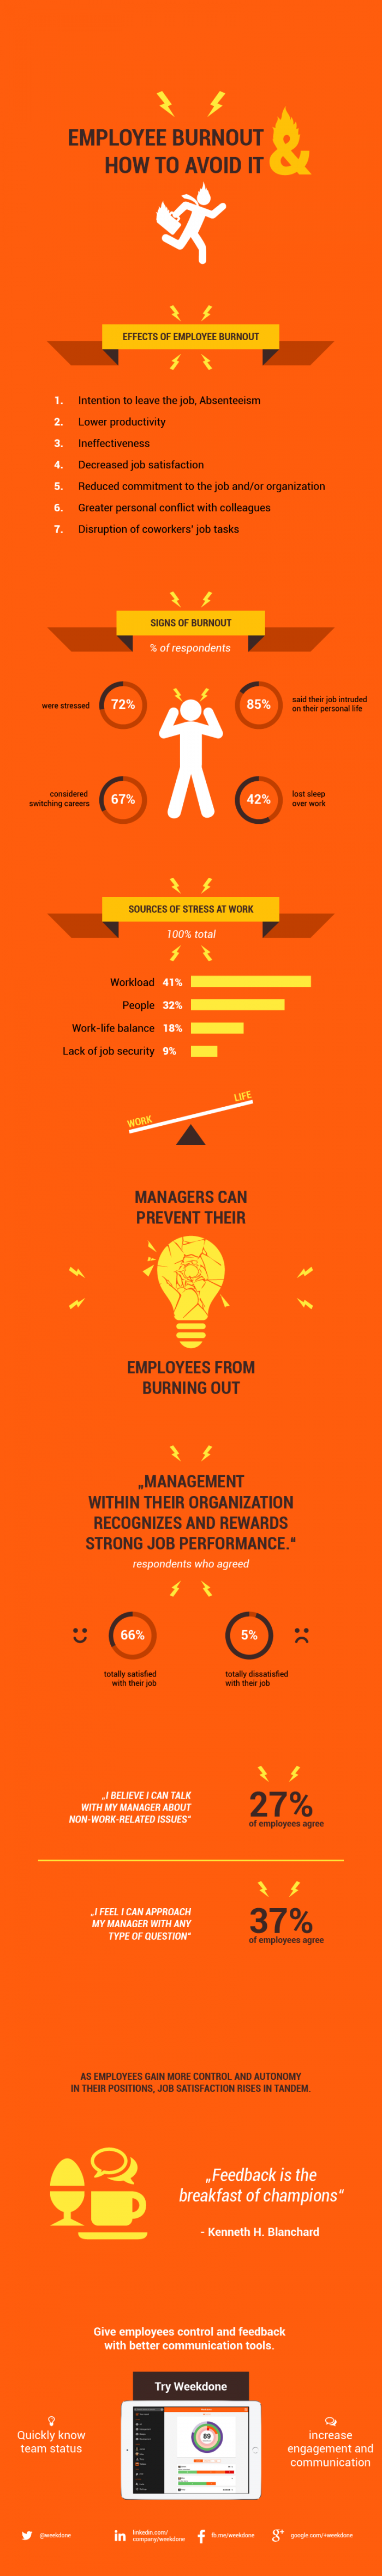 Employee Burnout